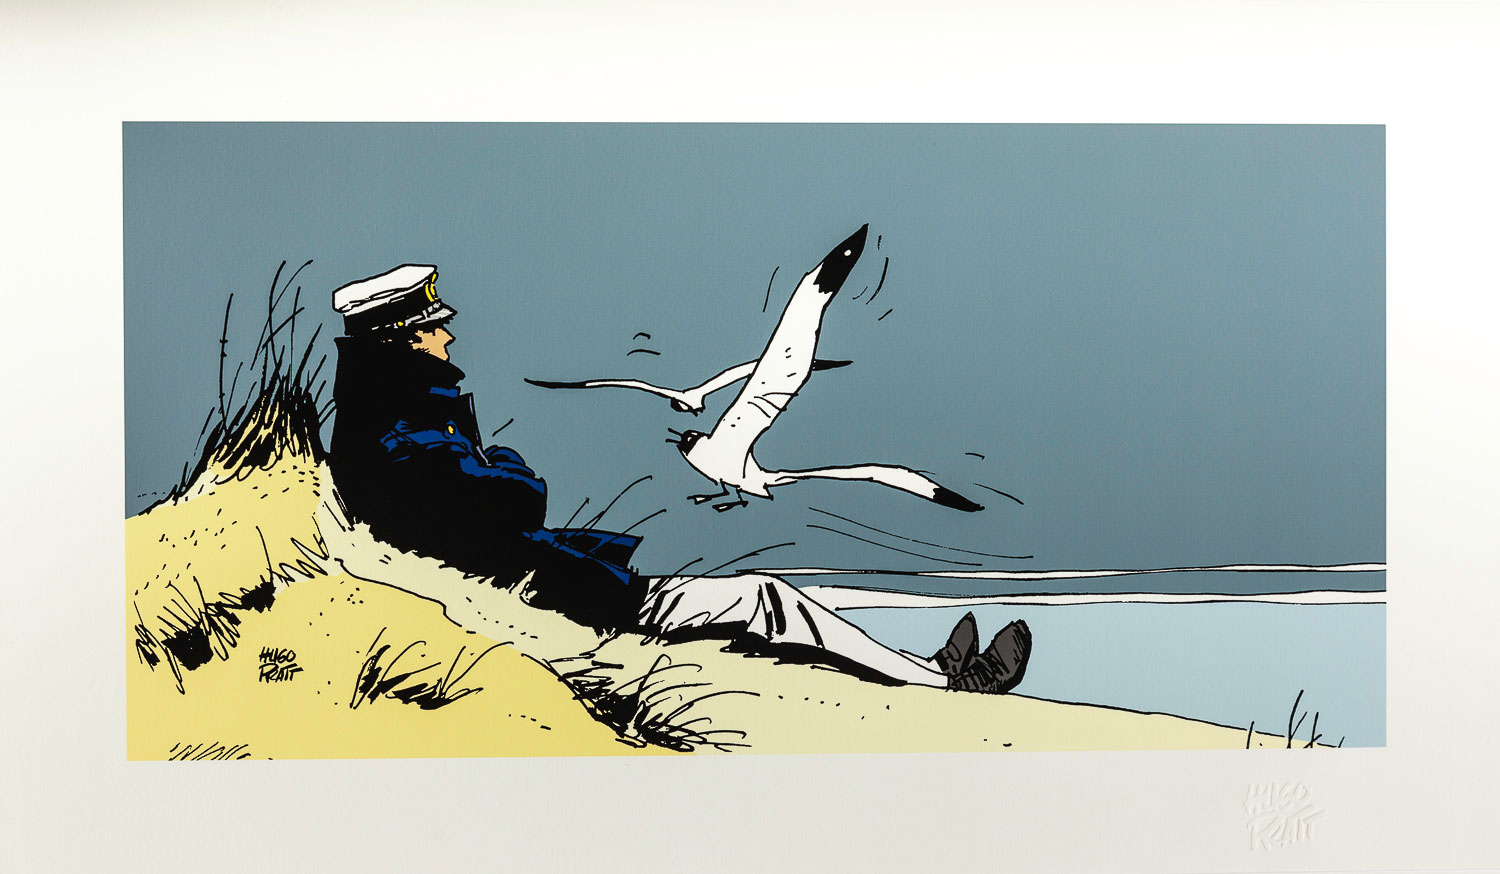 Stampa pigmentaria Hugo Pratt : Corto, marinaio sulla duna - Stampa incorniciata 60 x 35 cm 